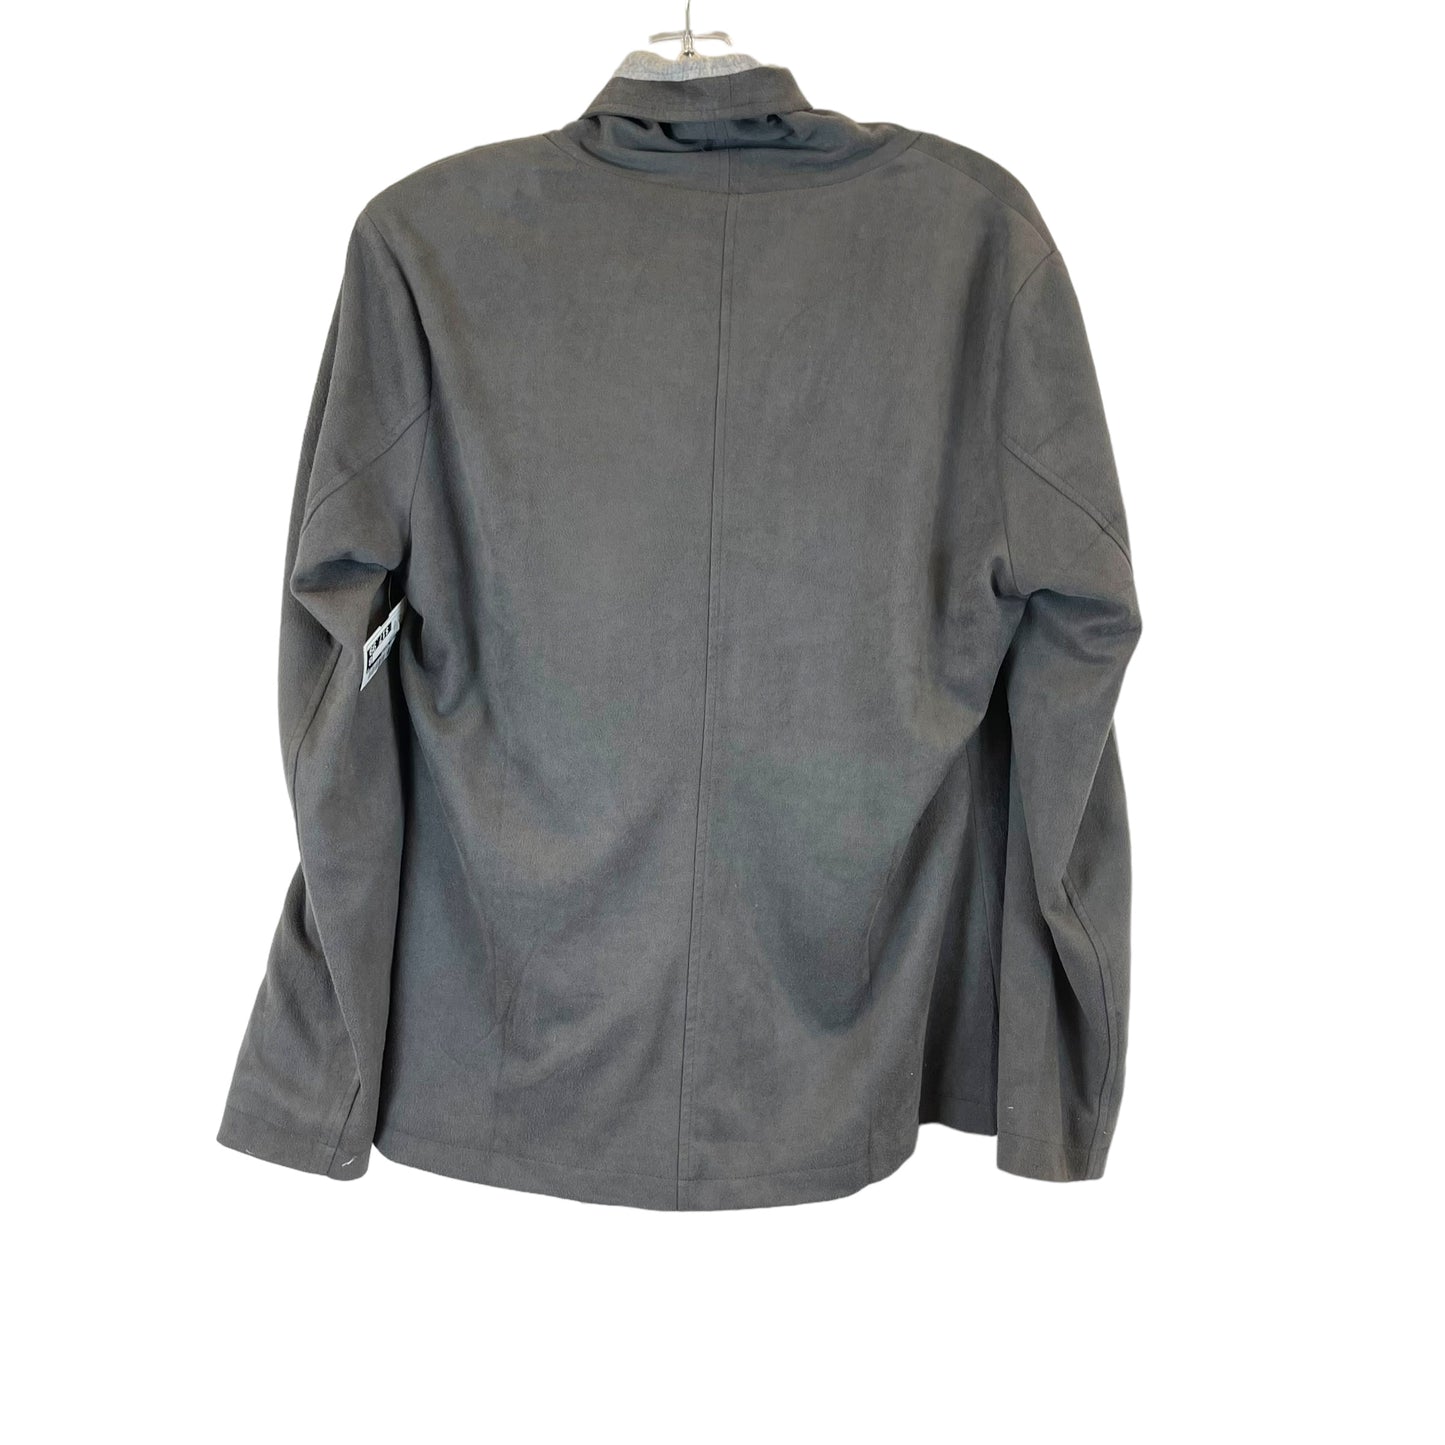 Jacket Shirt By astars   Size: L